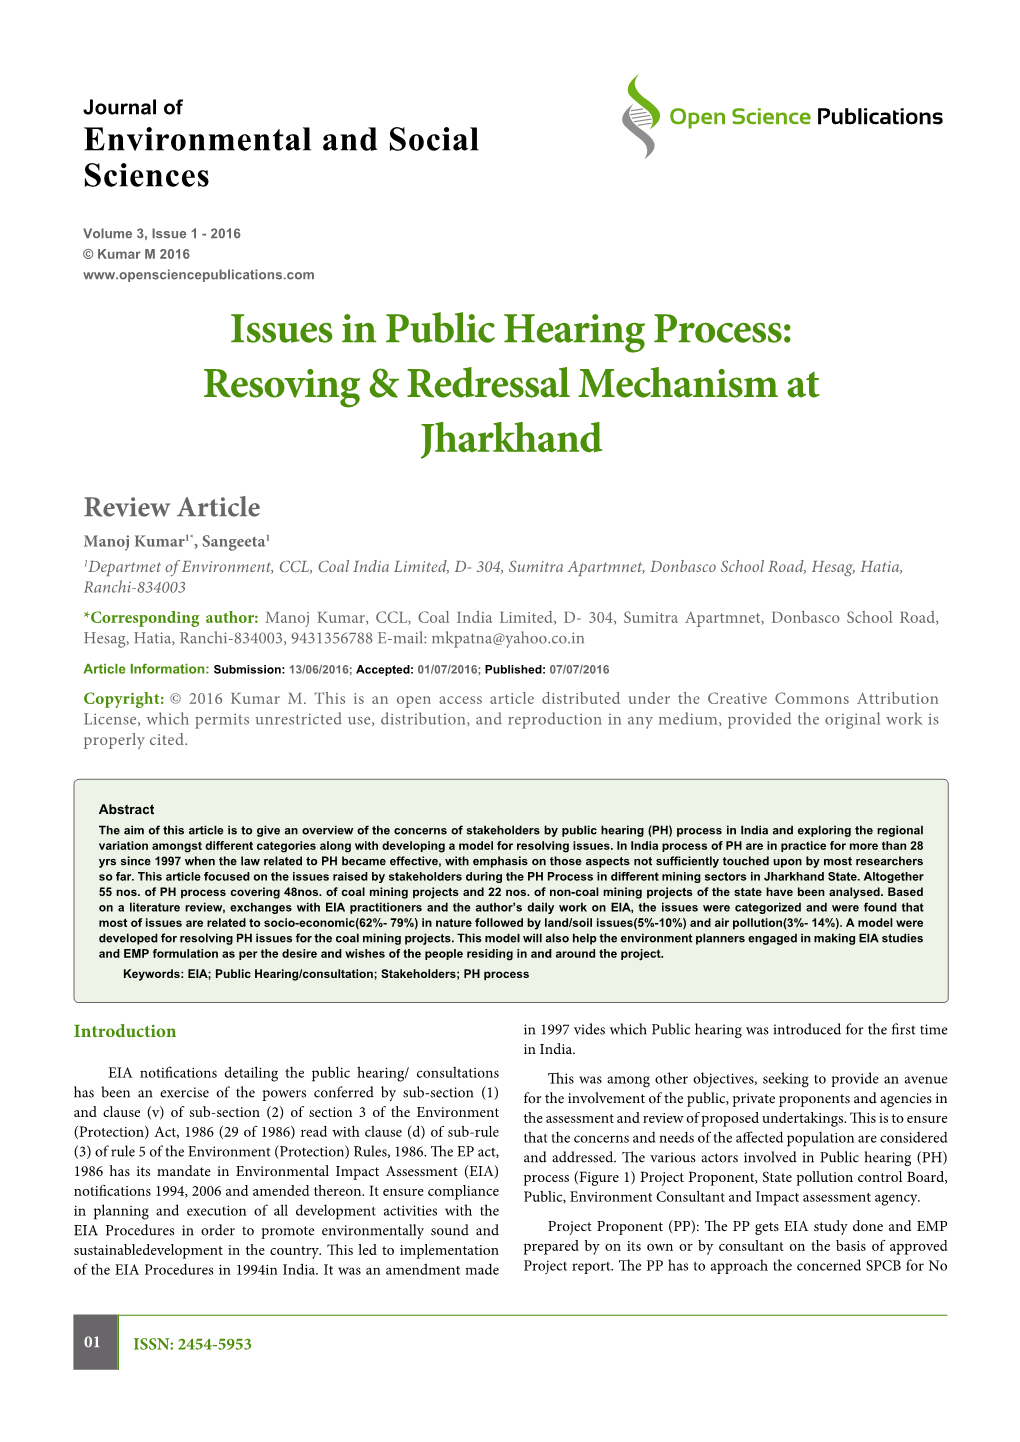 Issues in Public Hearing Process: Resoving & Redressal Mechanism